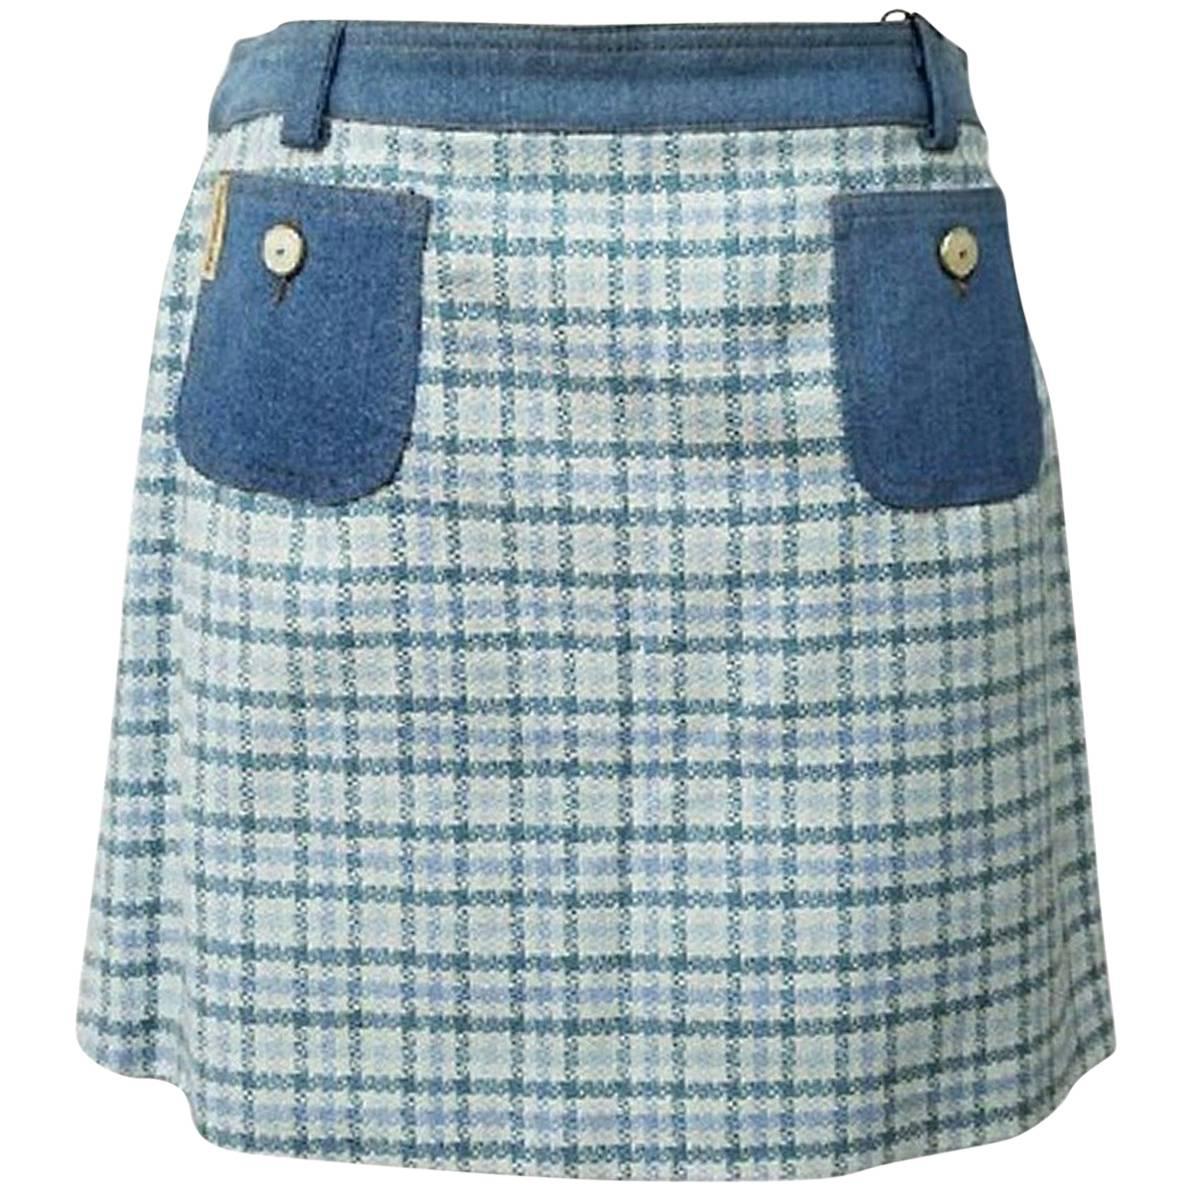 Dolce&Gabbana Pocket Skirt - Size: 8 (M, 29, 30) For Sale